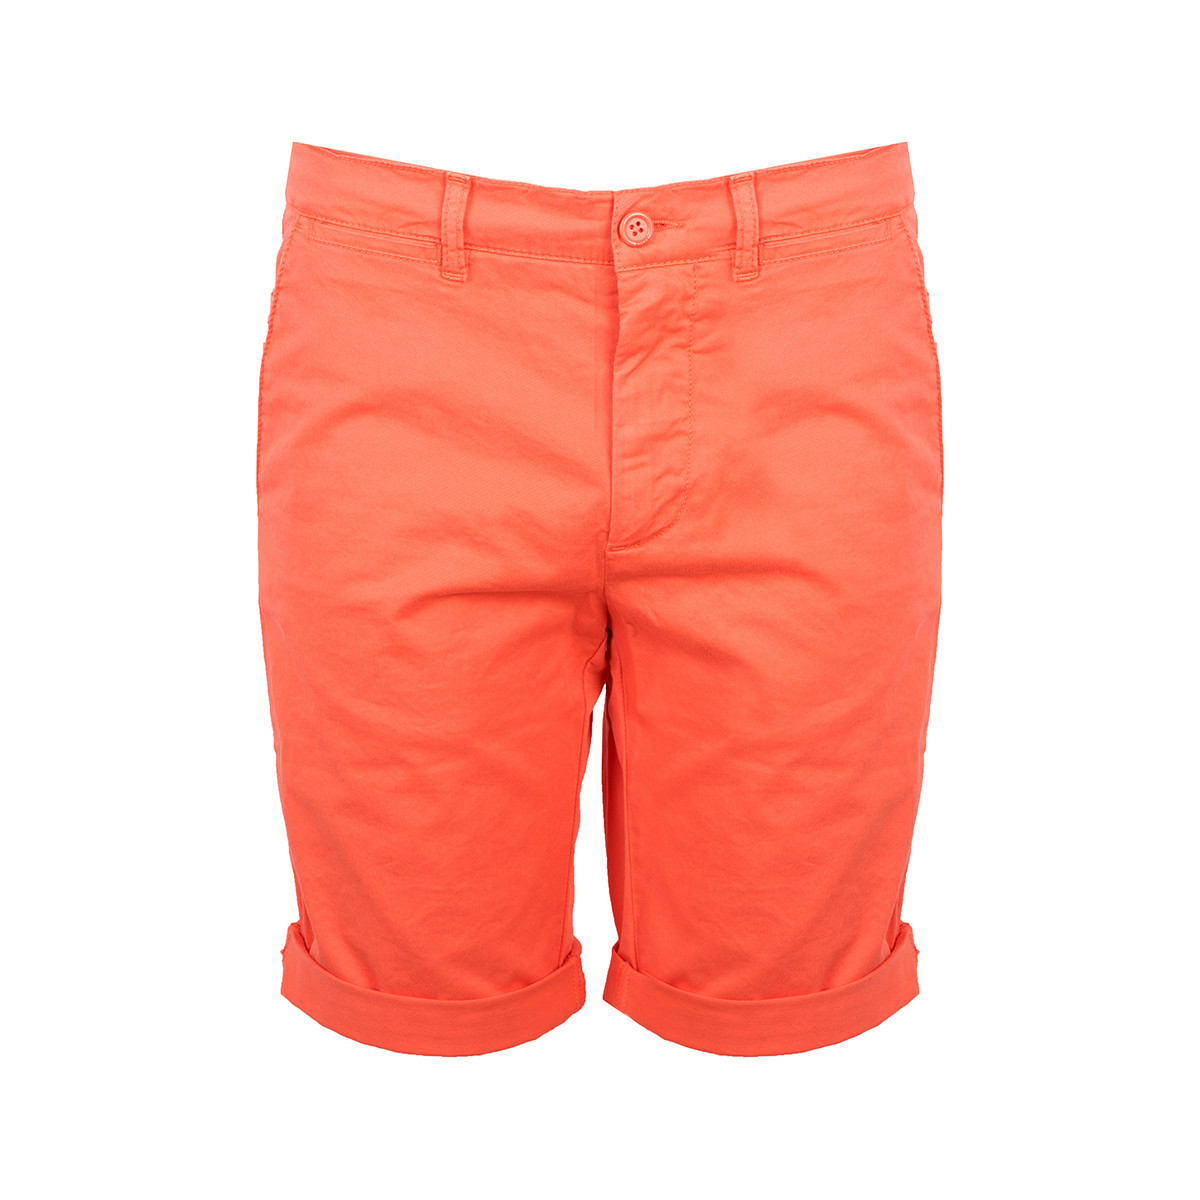 textil Hombre Shorts / Bermudas Bikkembergs C O 12B H1 S B193 Naranja